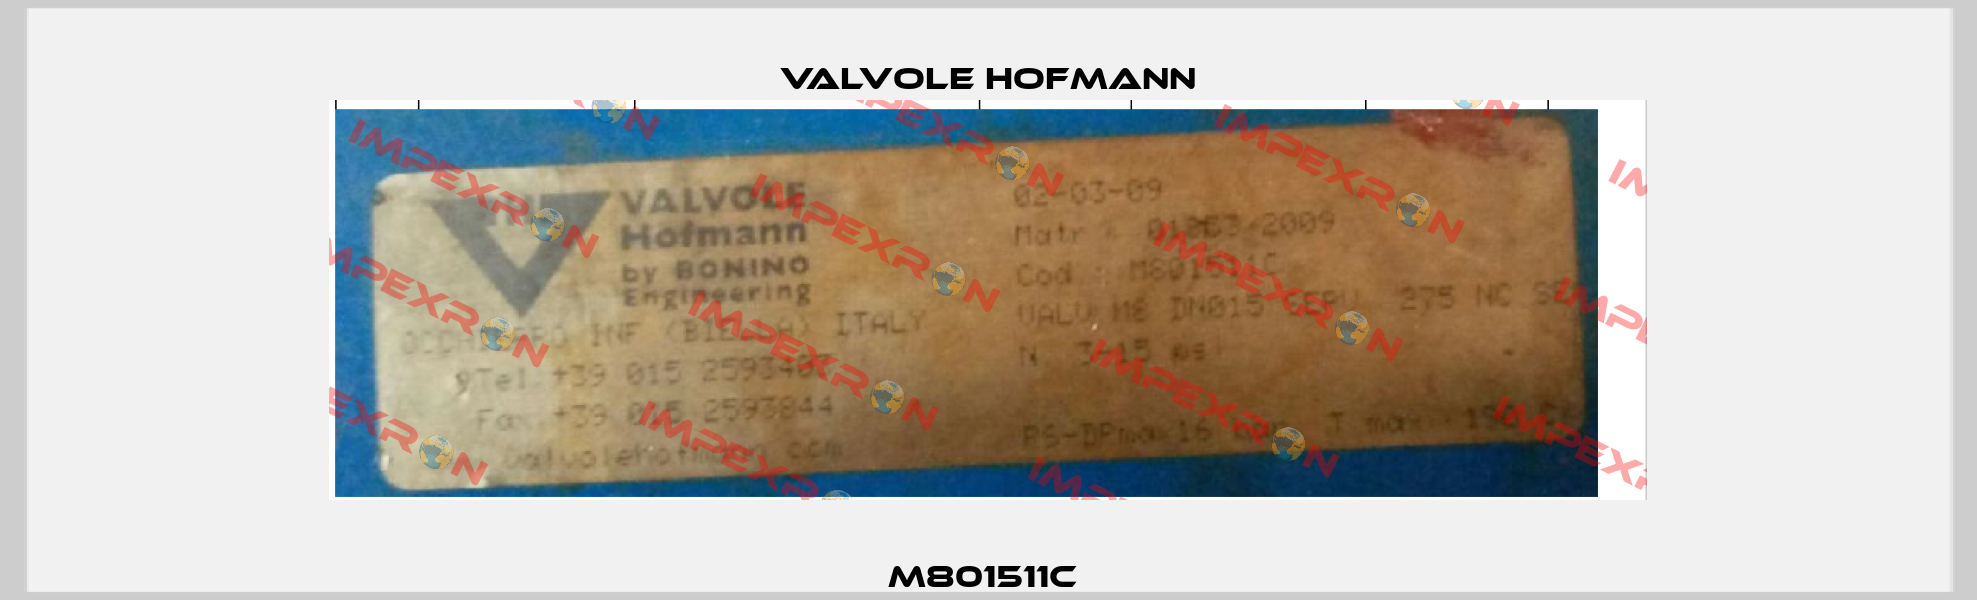 M801511C  Valvole Hofmann